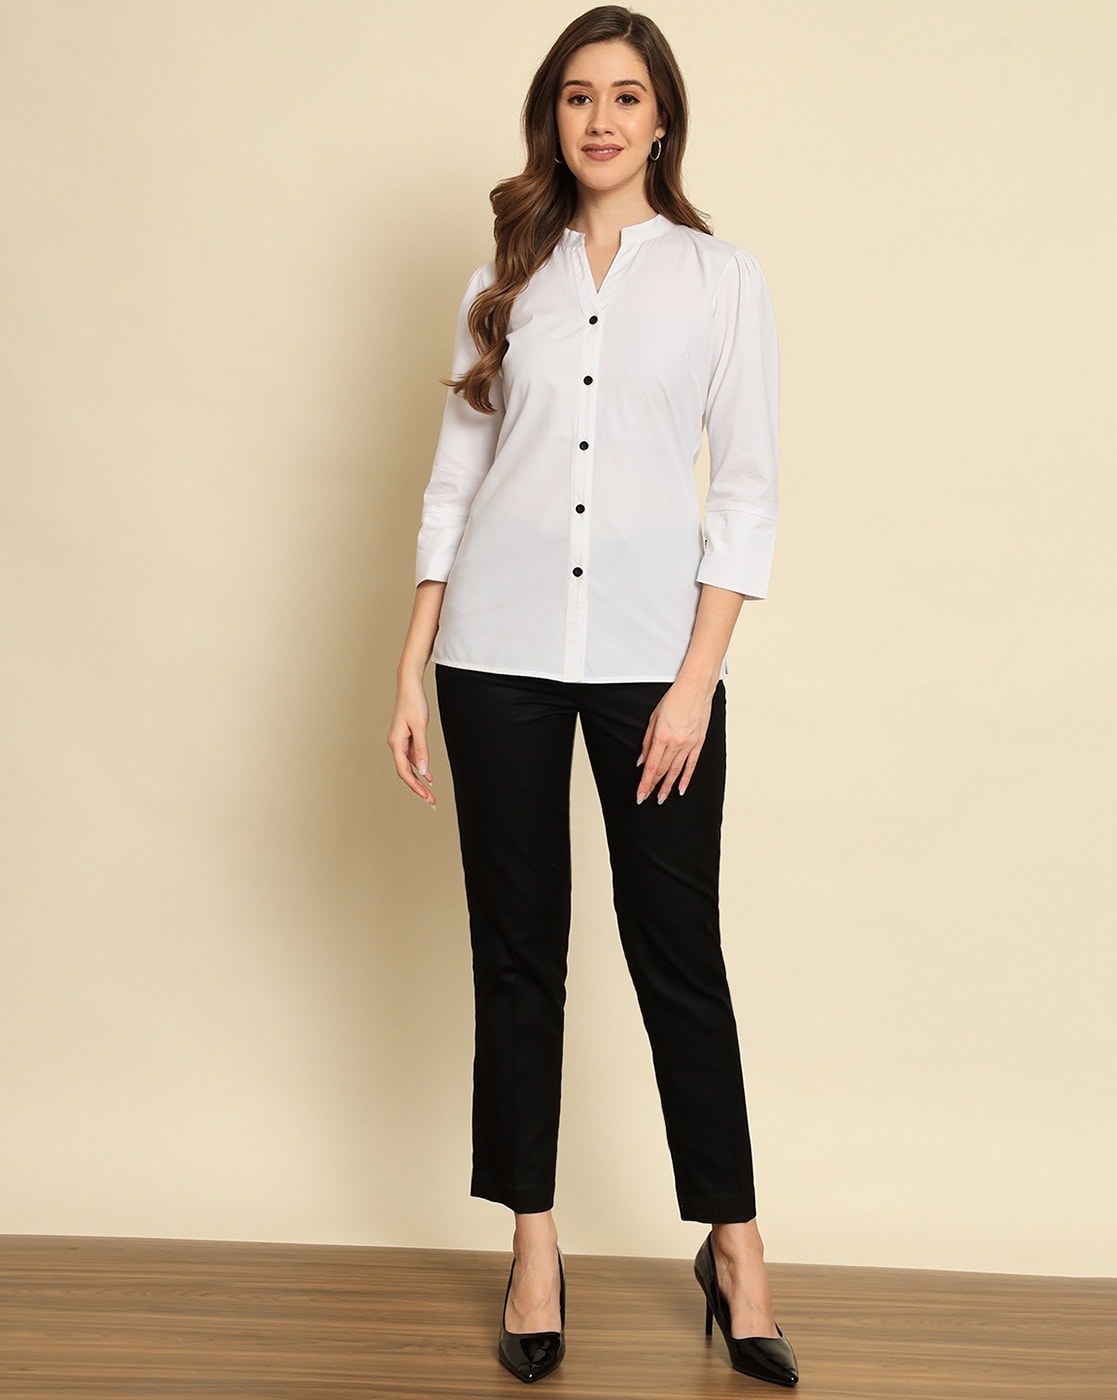 black and white | Classic white shirt, Style, Fashion